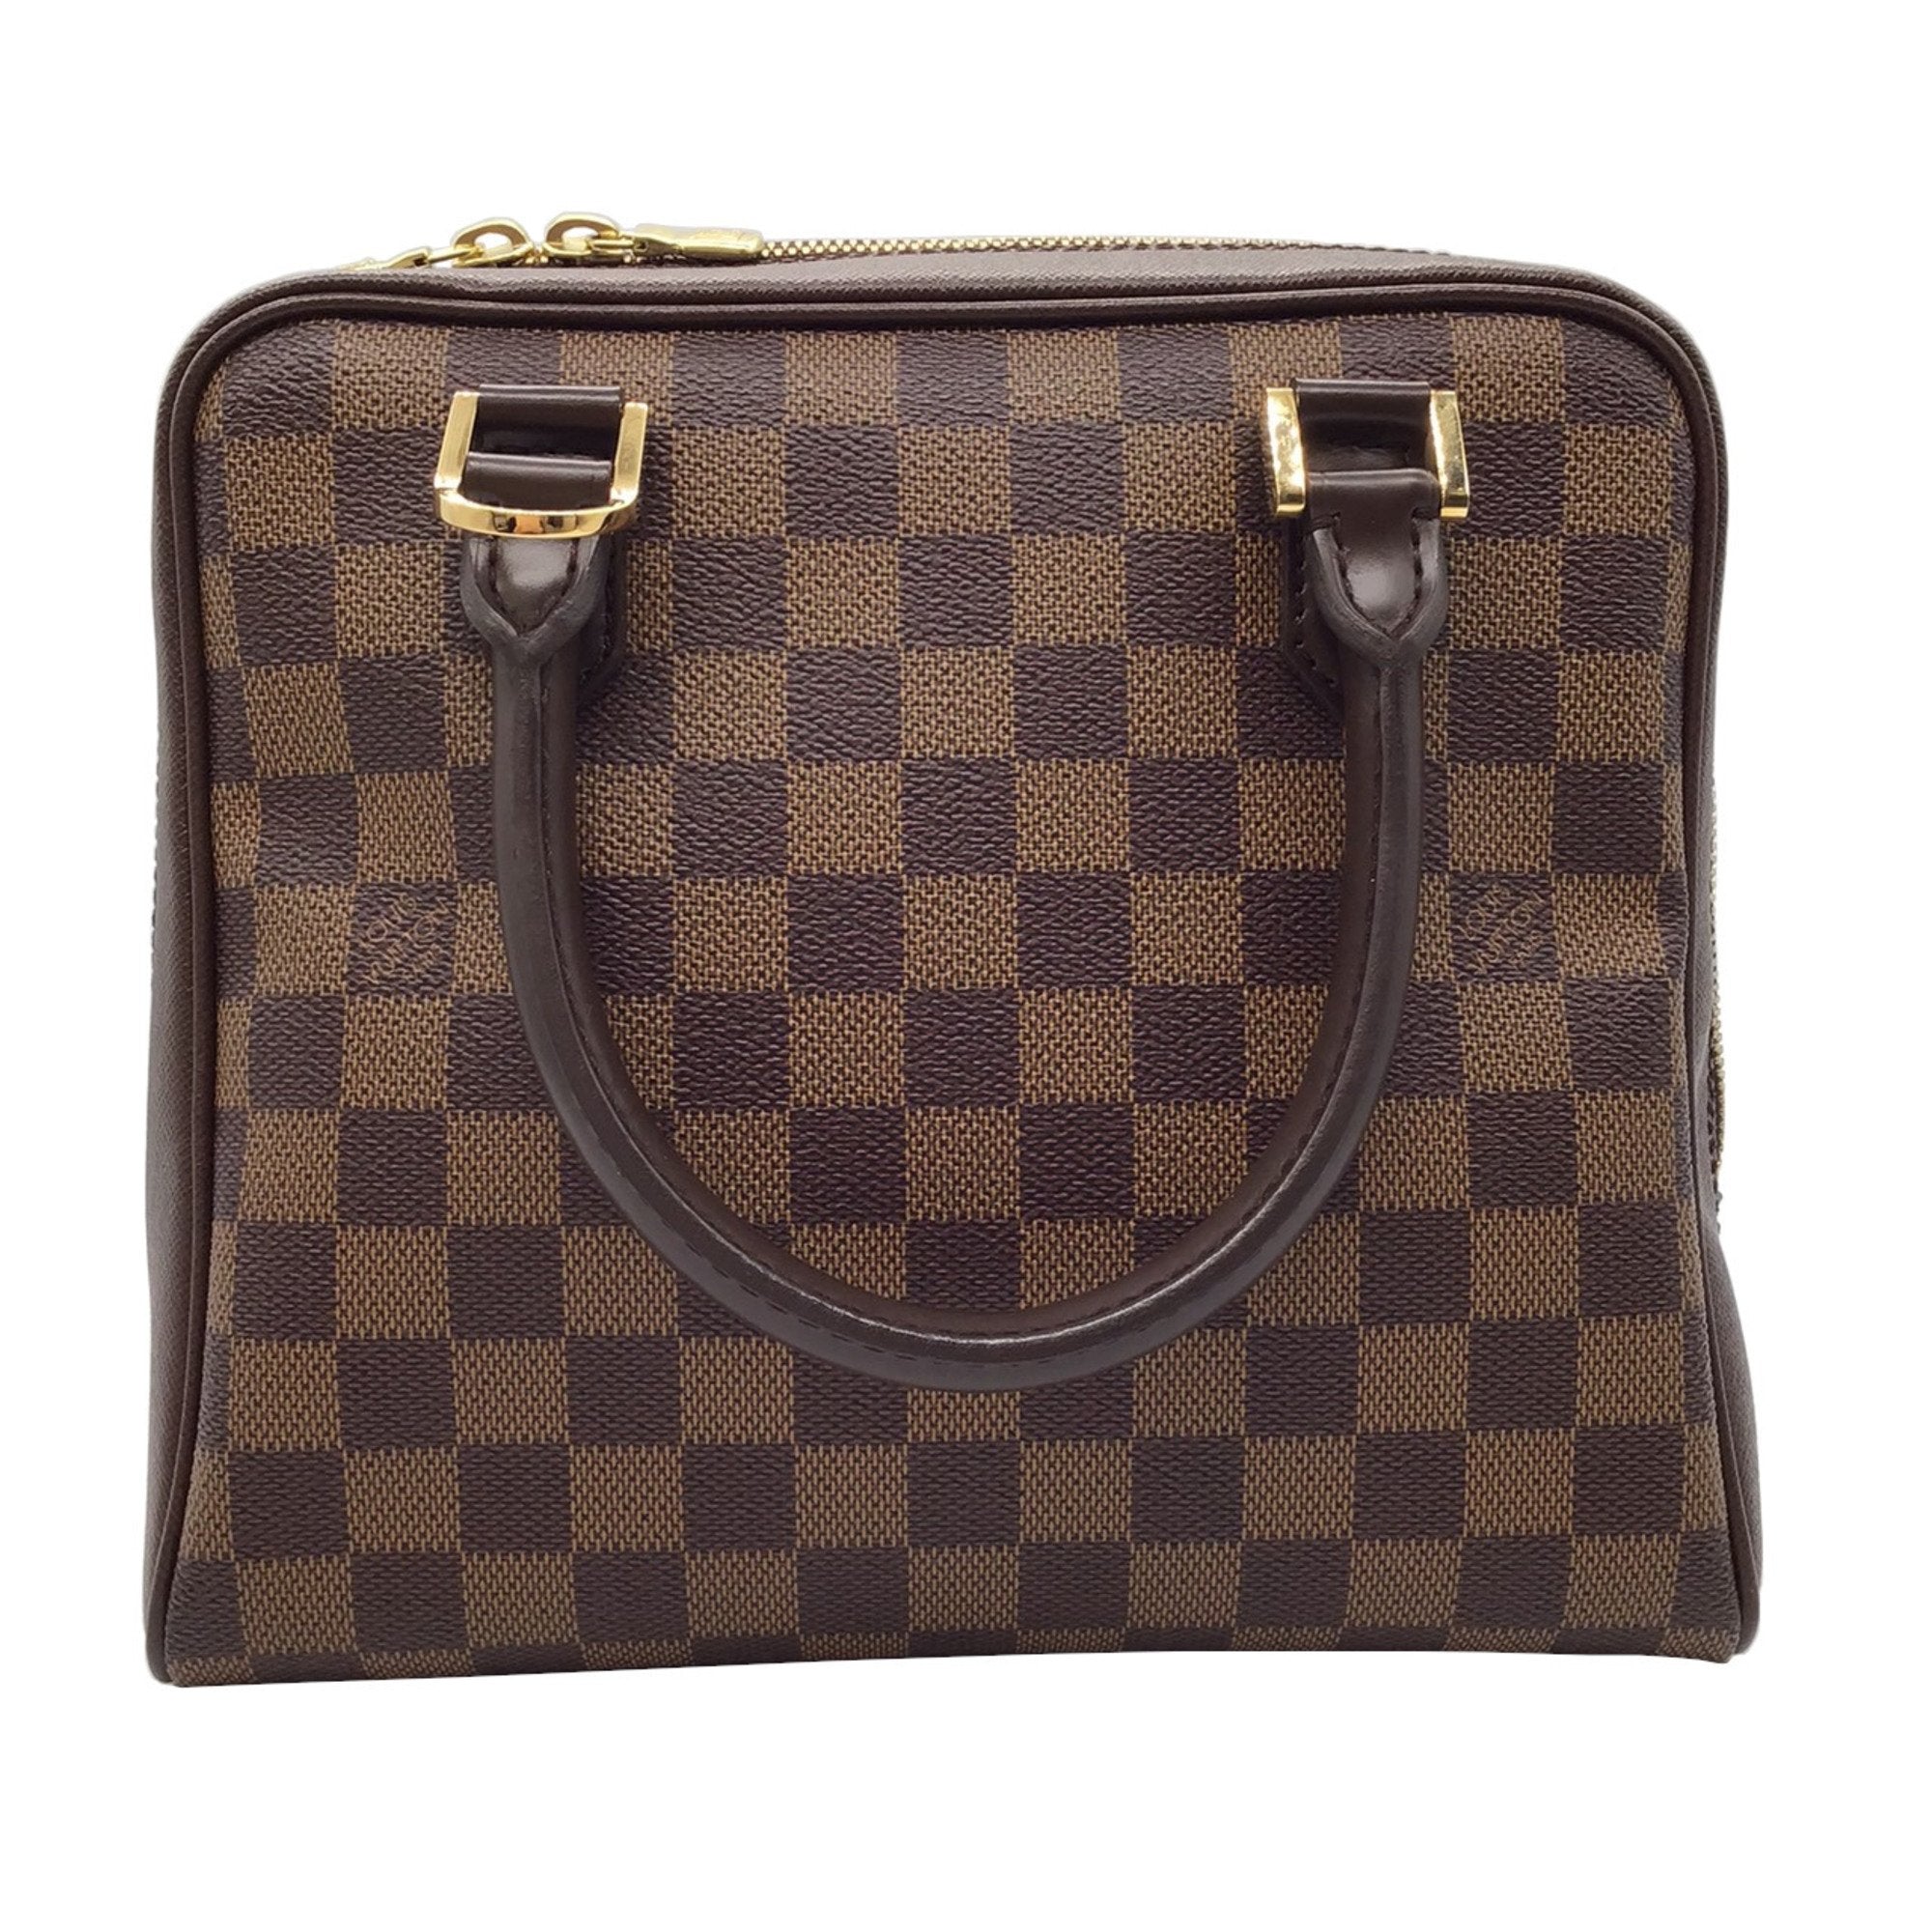 LOUIS VUITTON Handbag N51155 Triana Damier canvas Brown Women Used